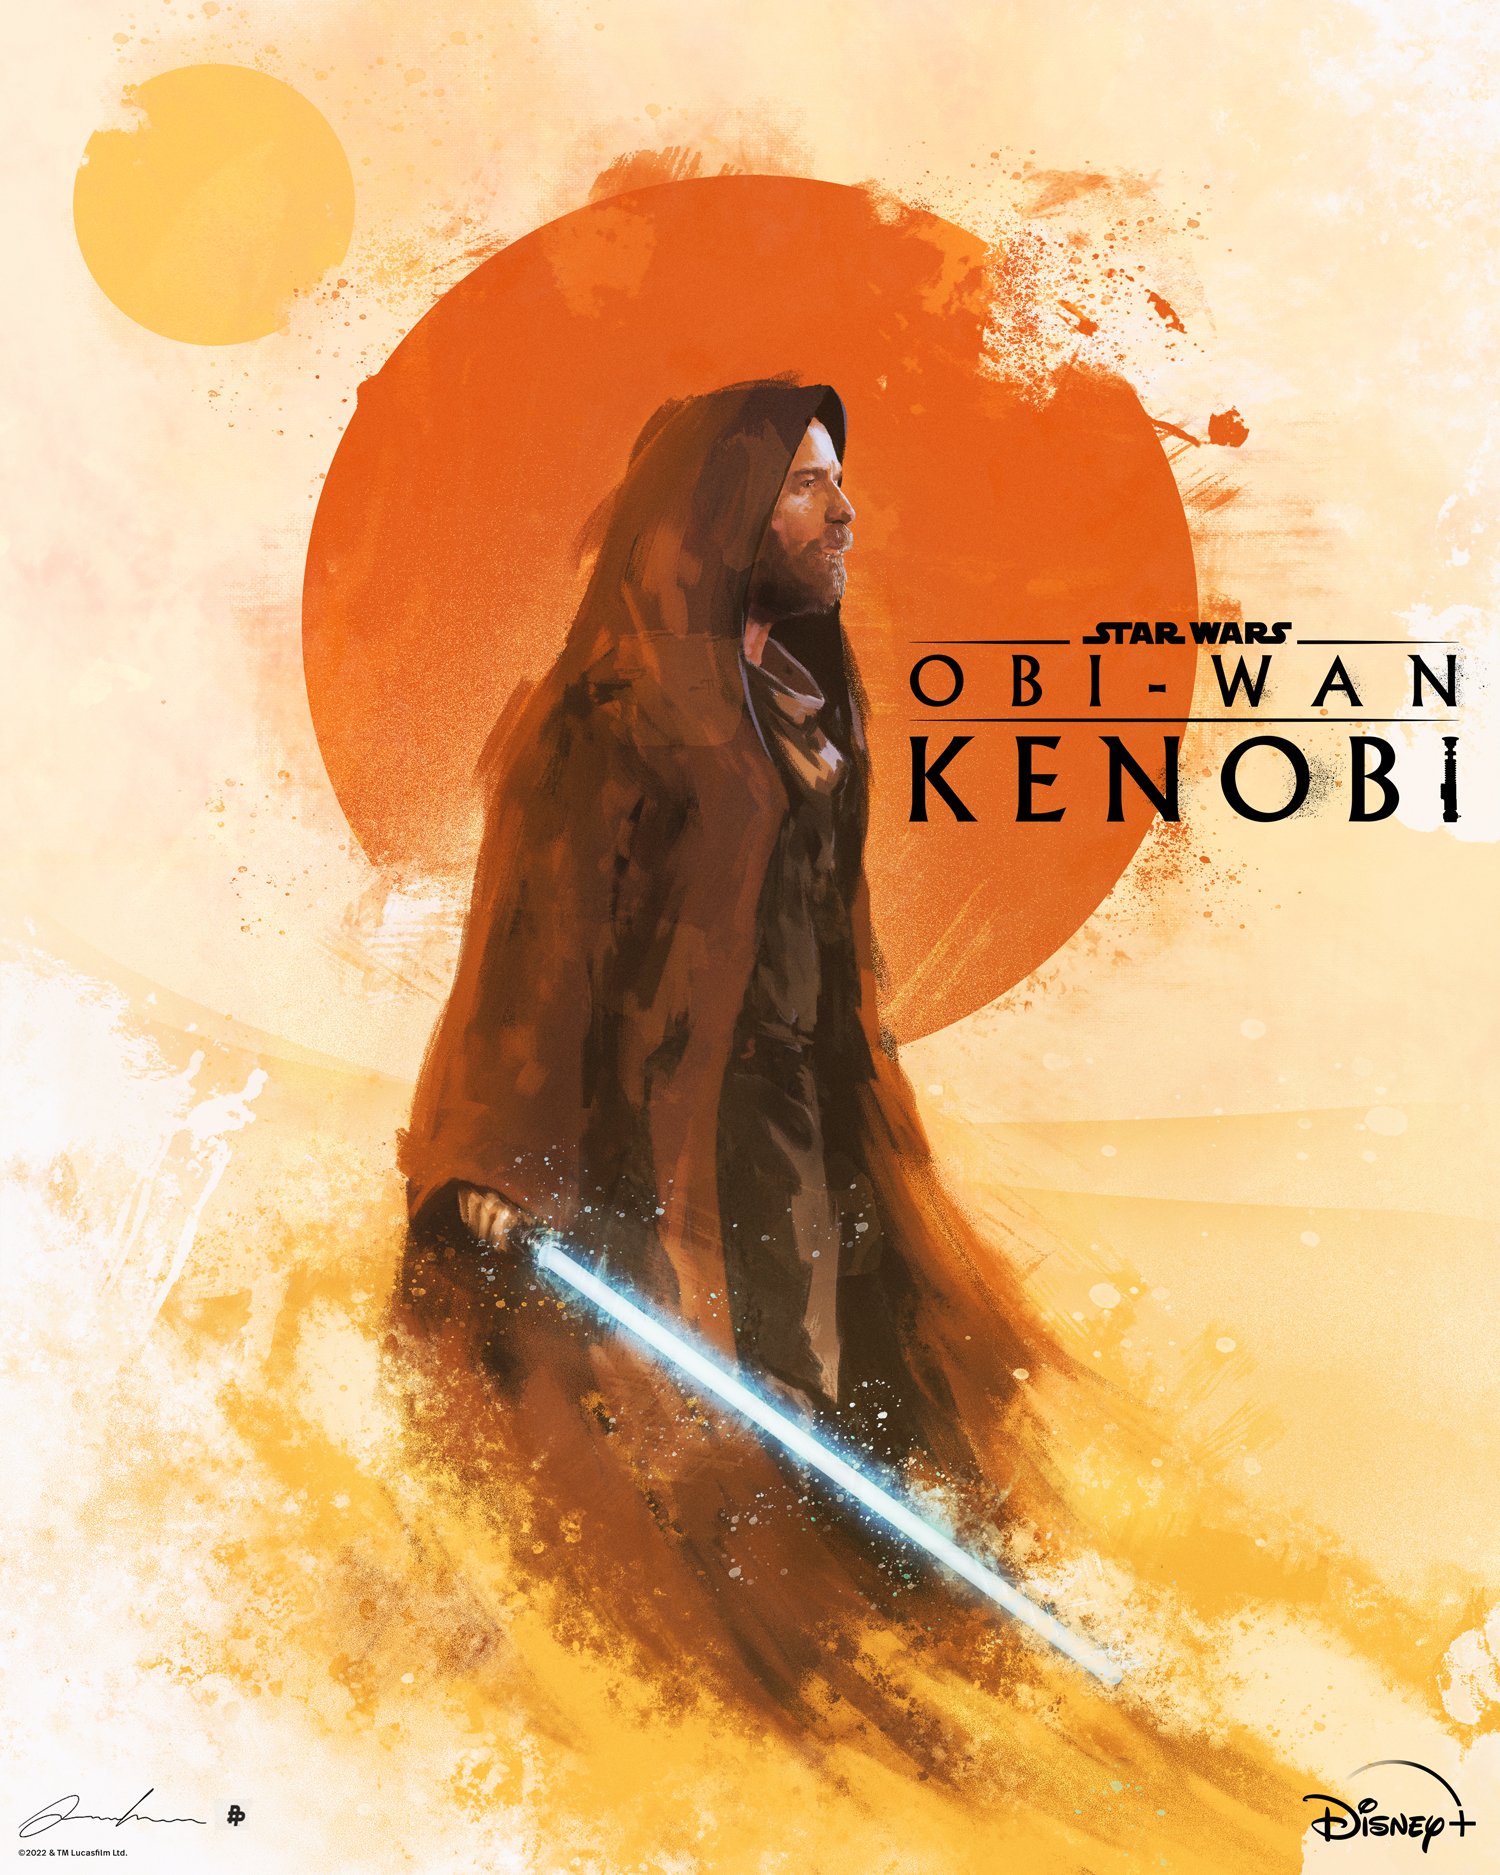 Obi Wan Kenobi poster